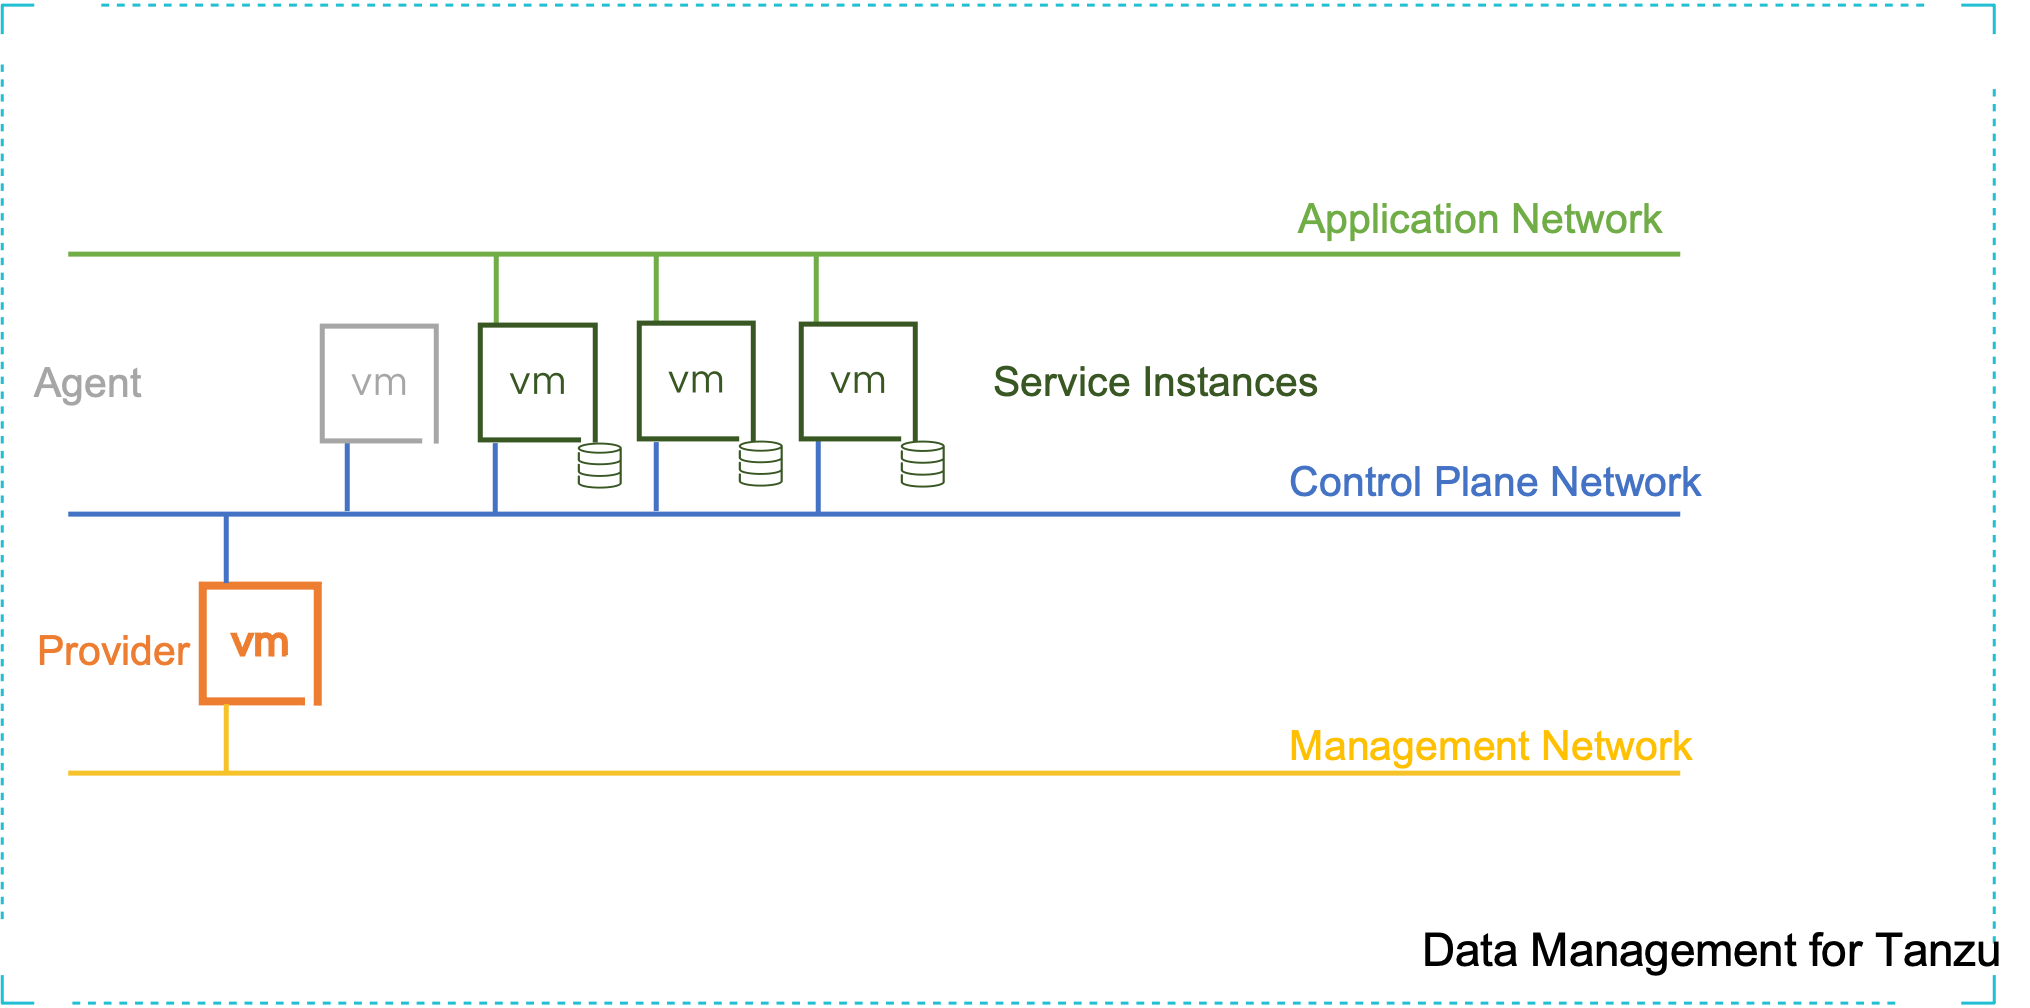 Data Management for Tanzu Network Architecture